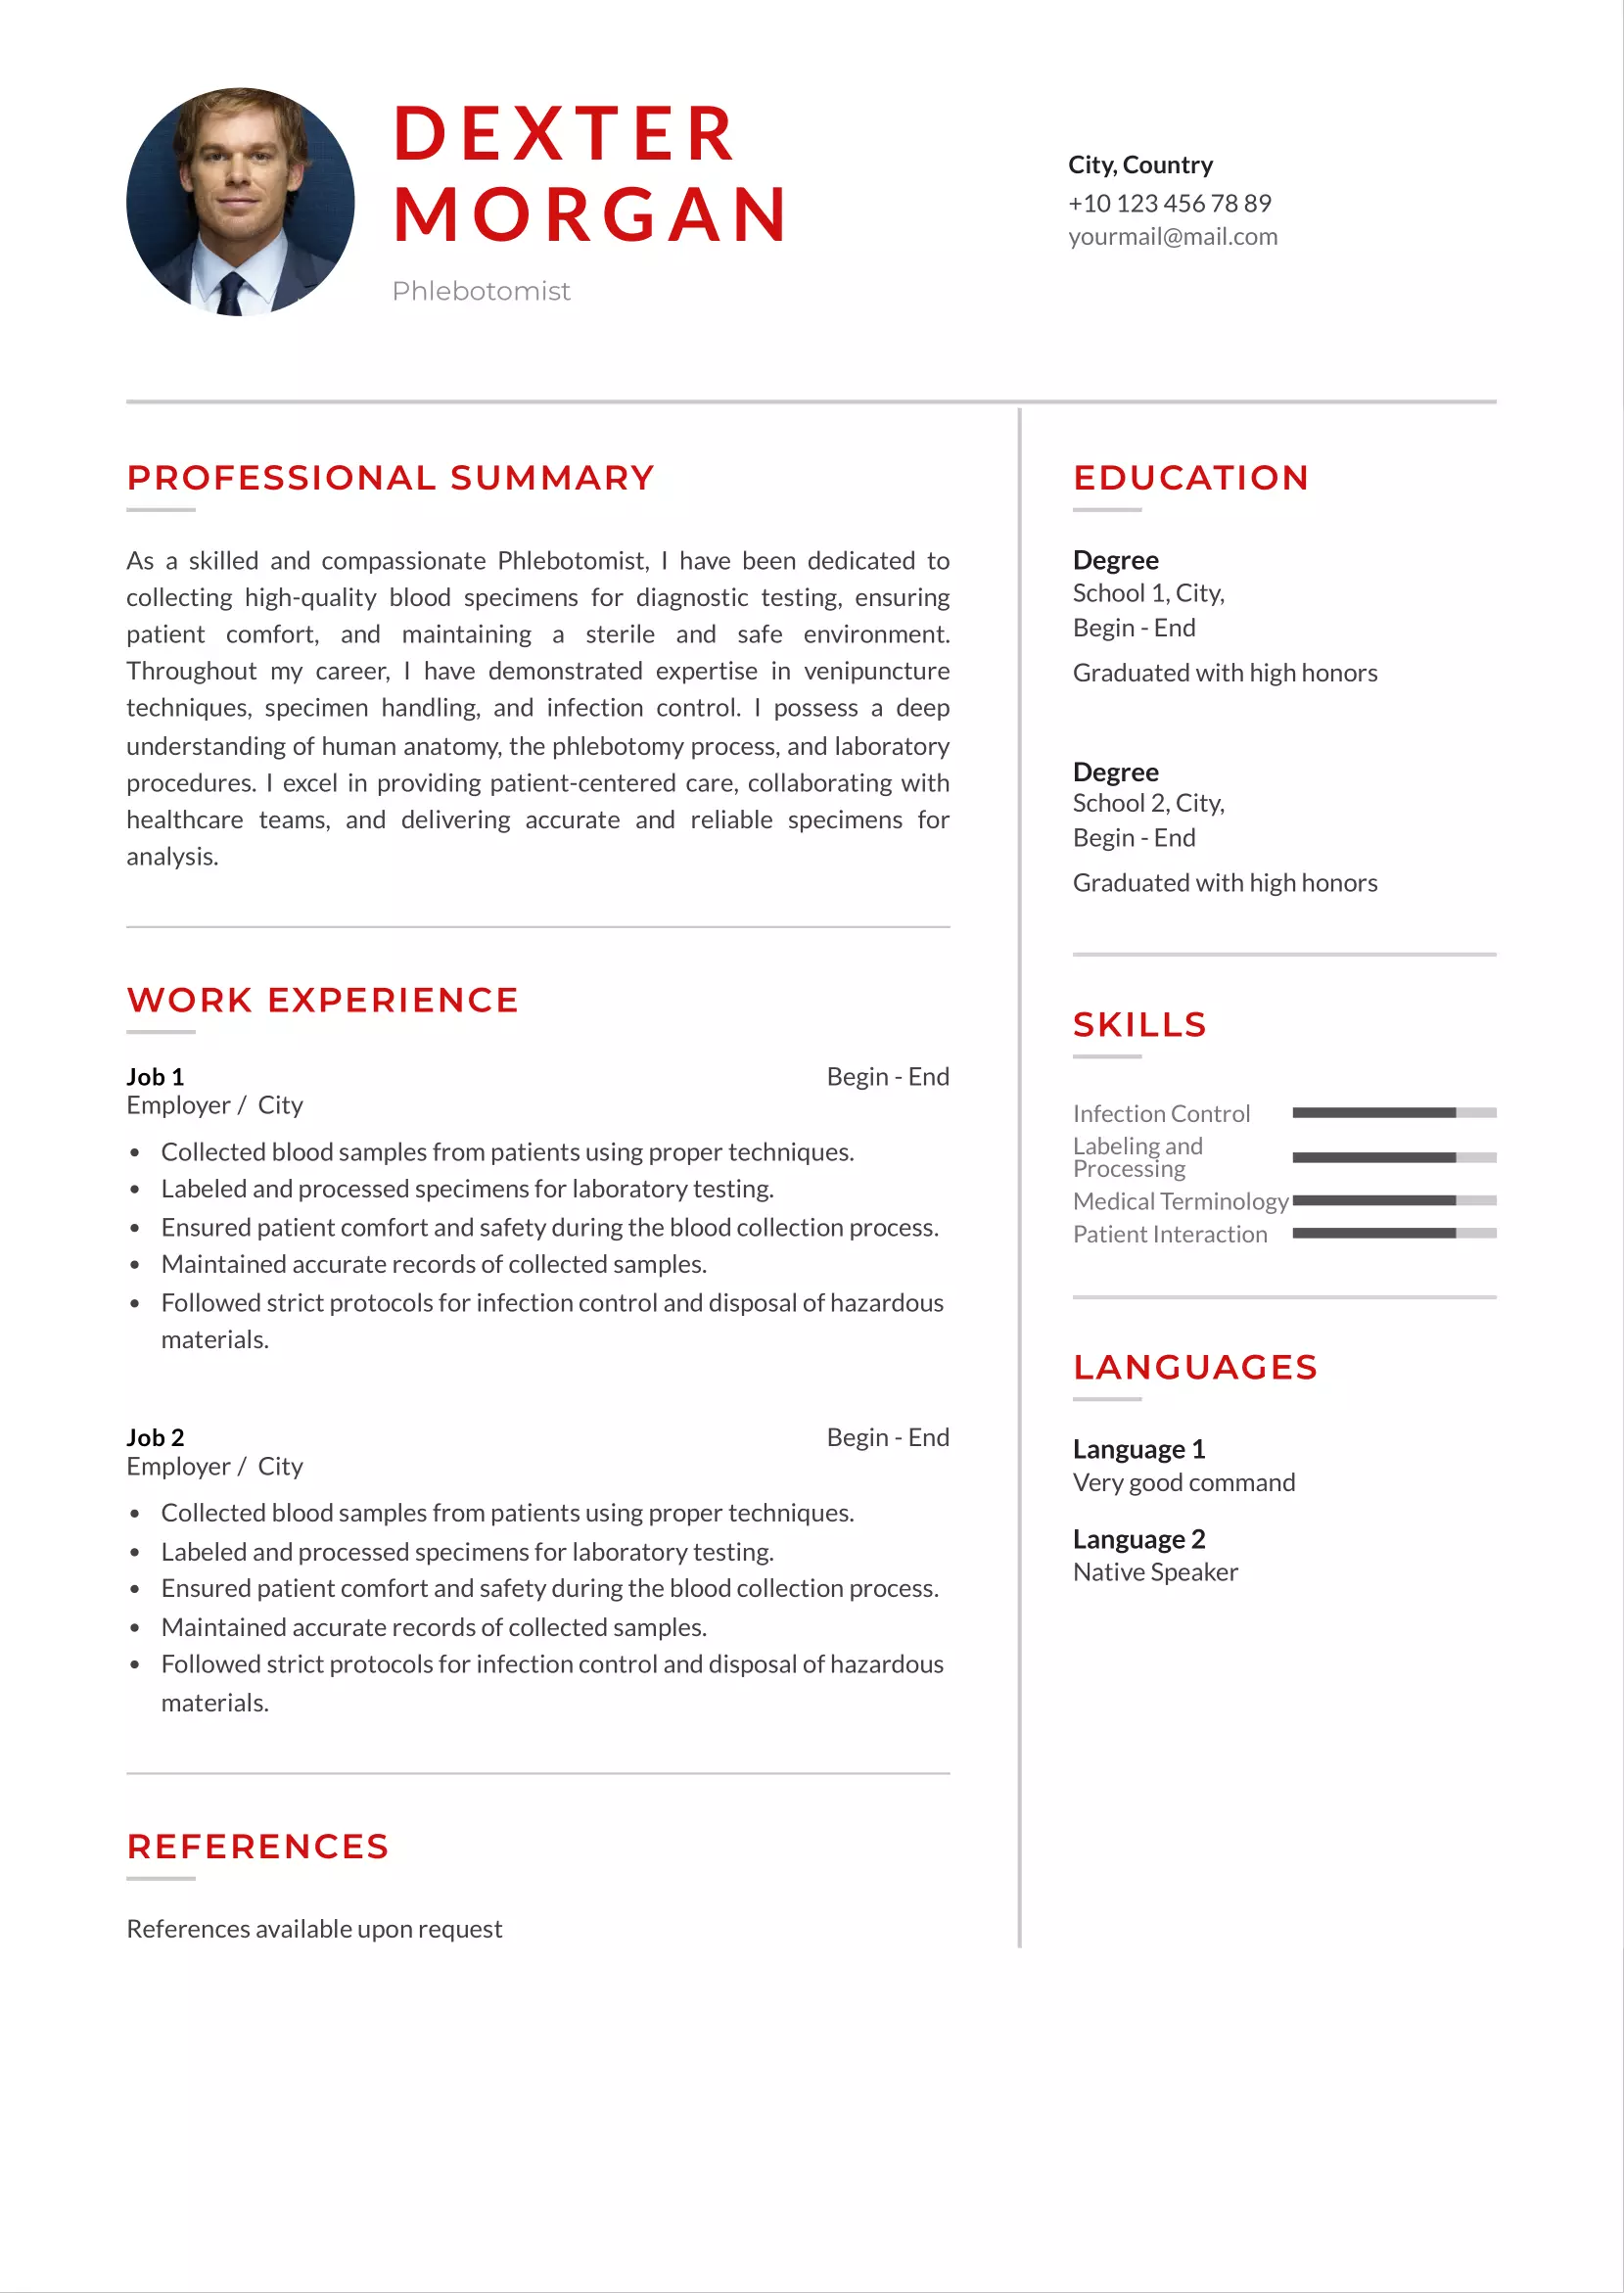 Phlebotomist resume CV